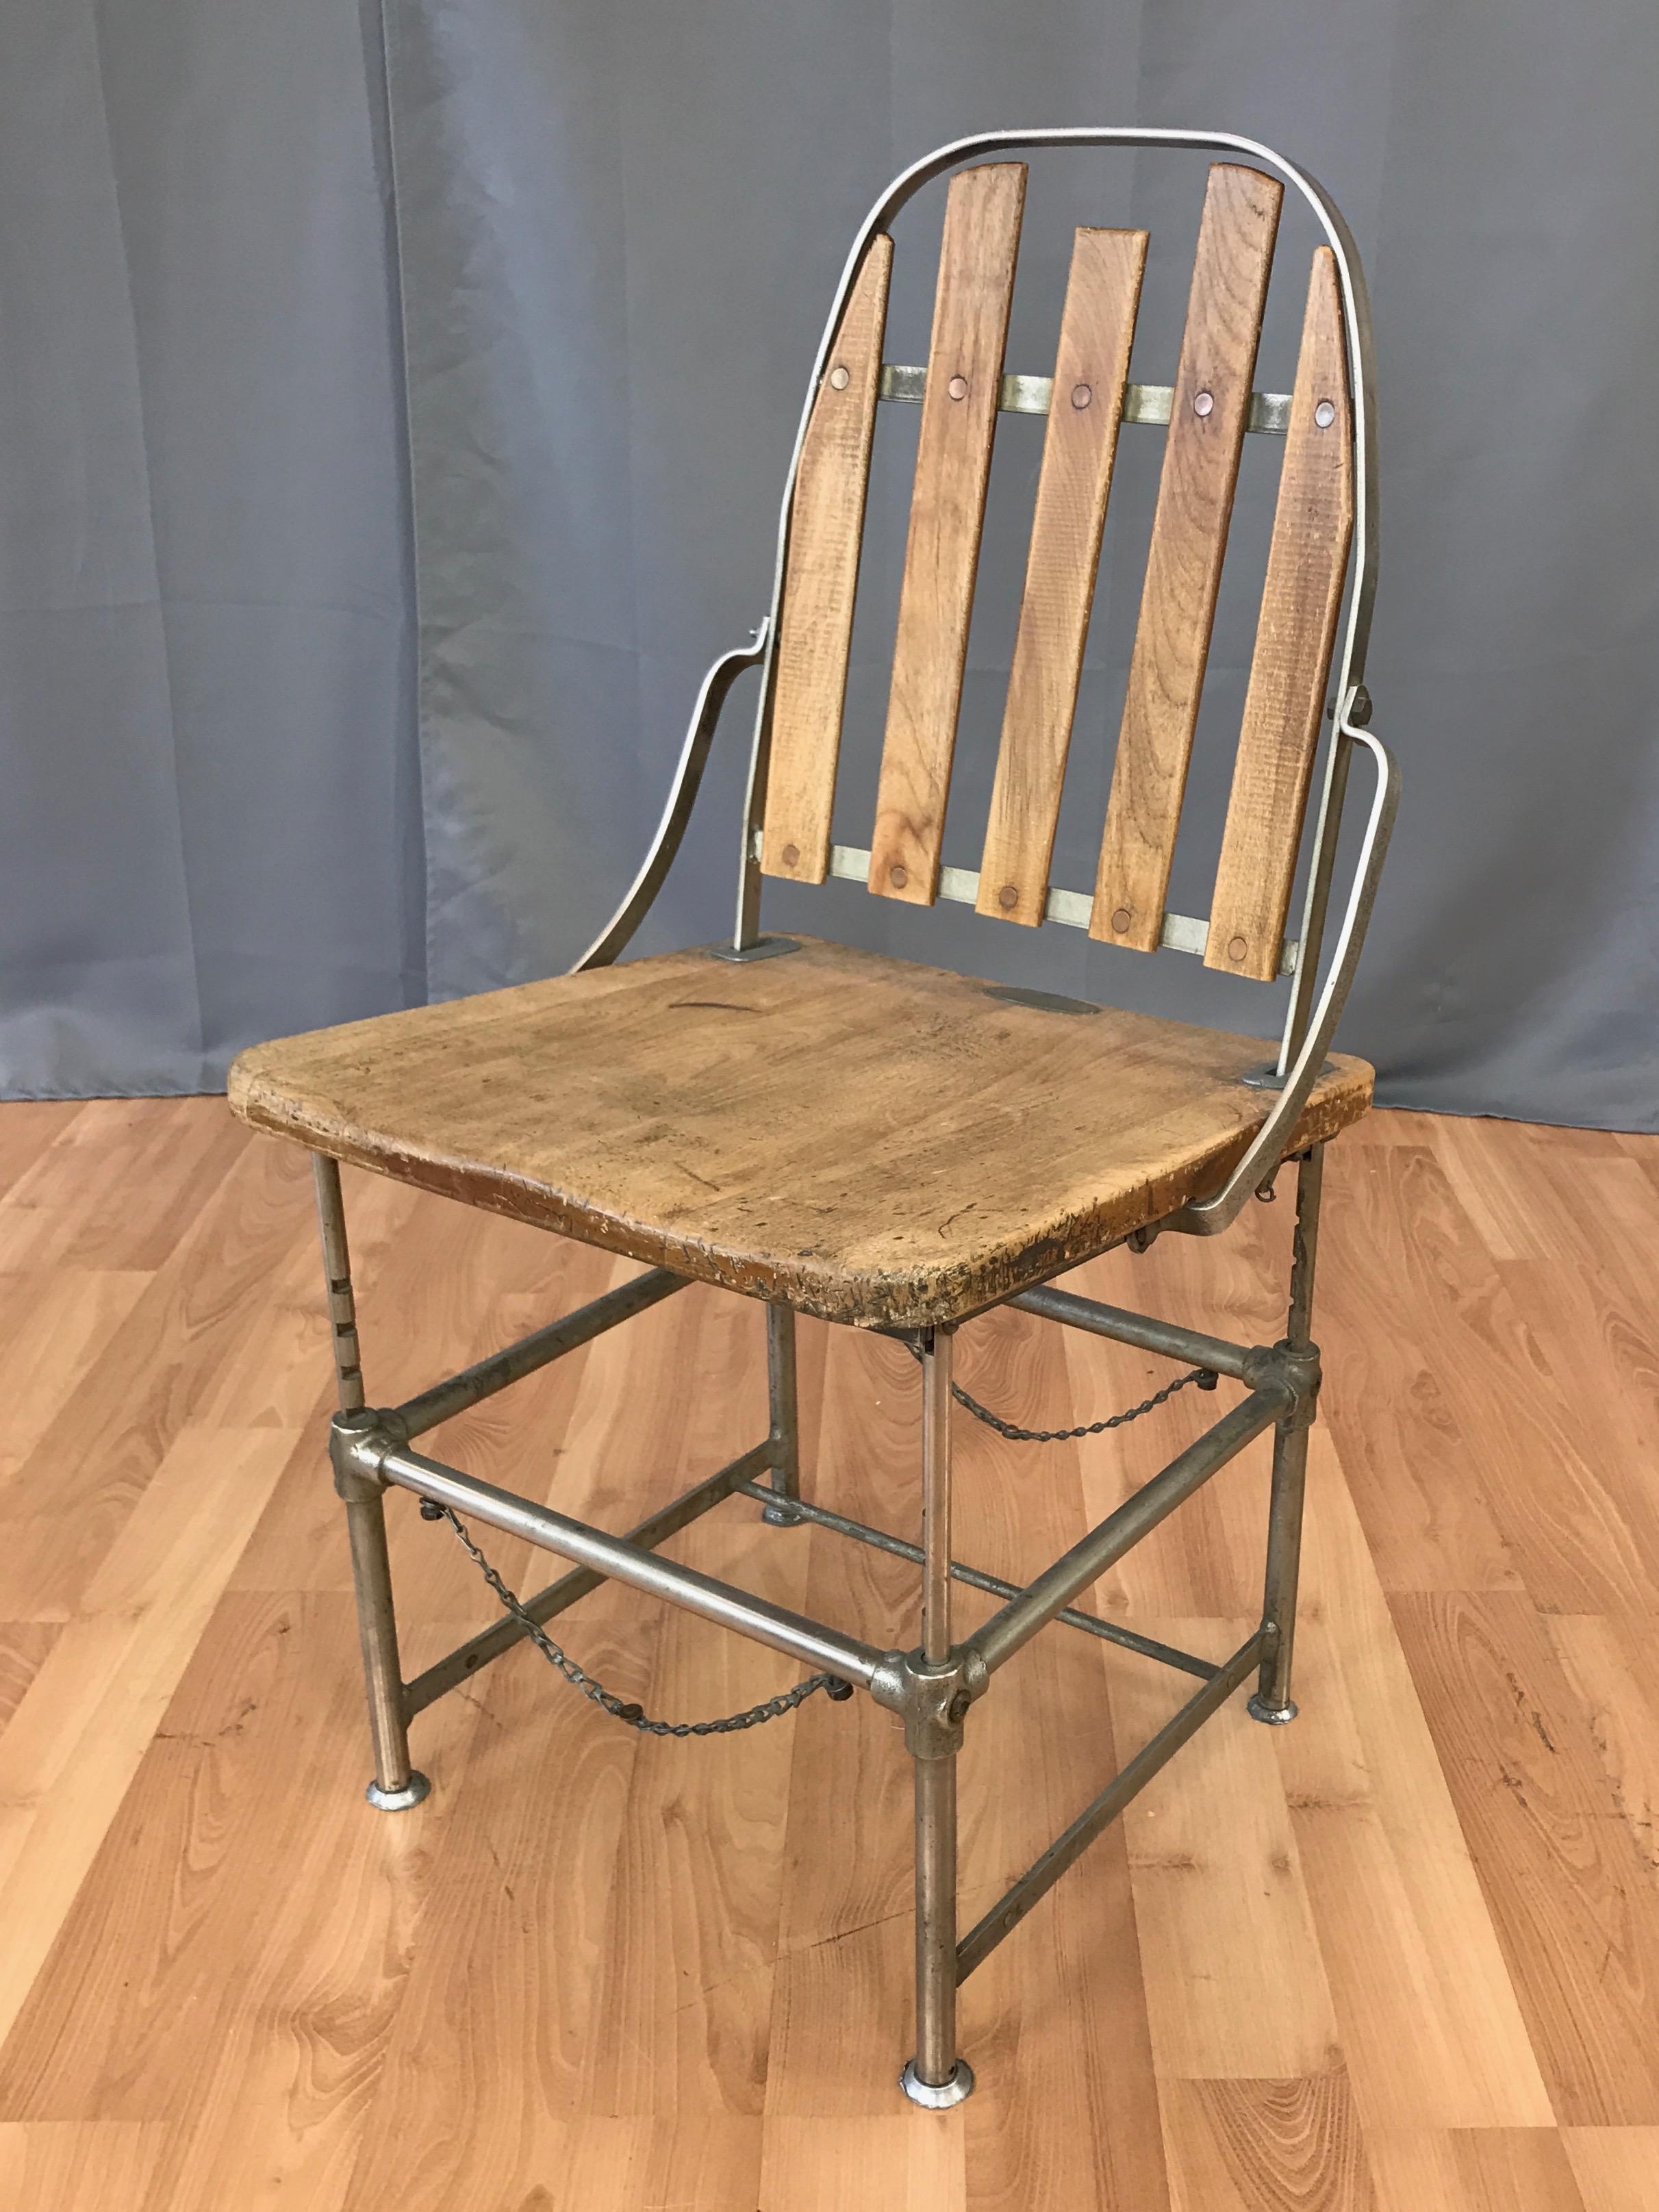 American Brizard & Young “Adjustable Industrial Chair”, circa 1900